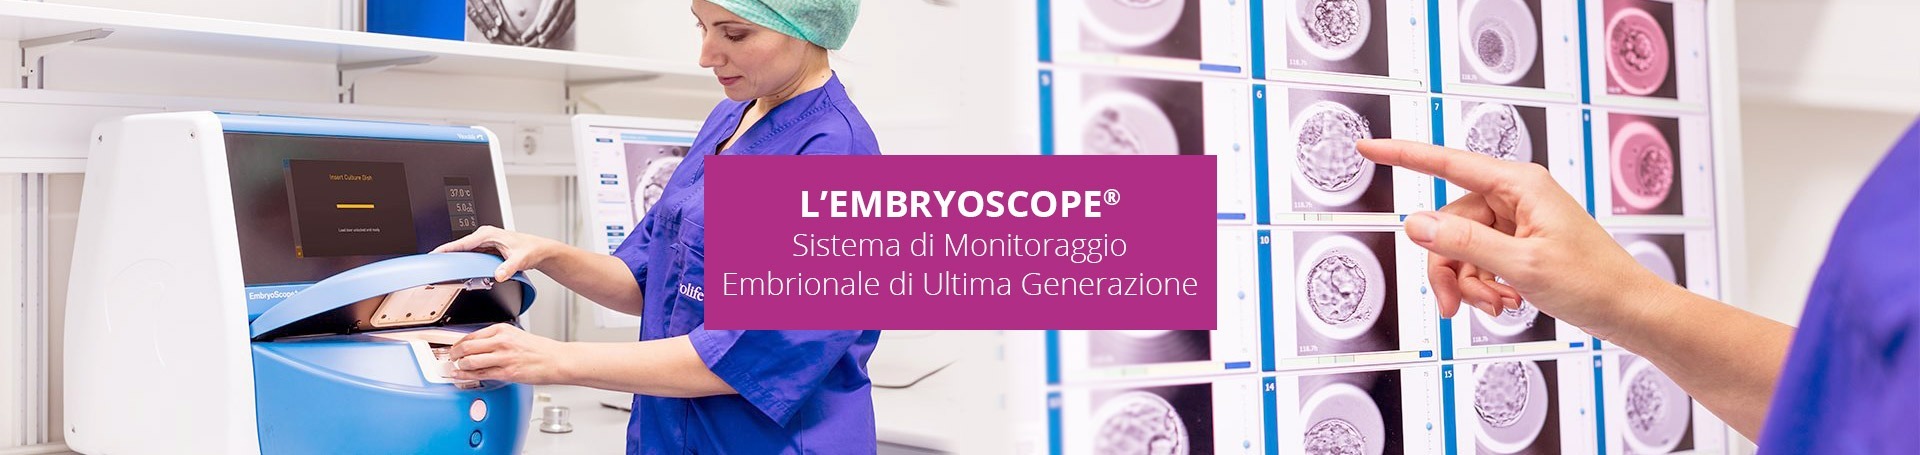 L'embryoscope